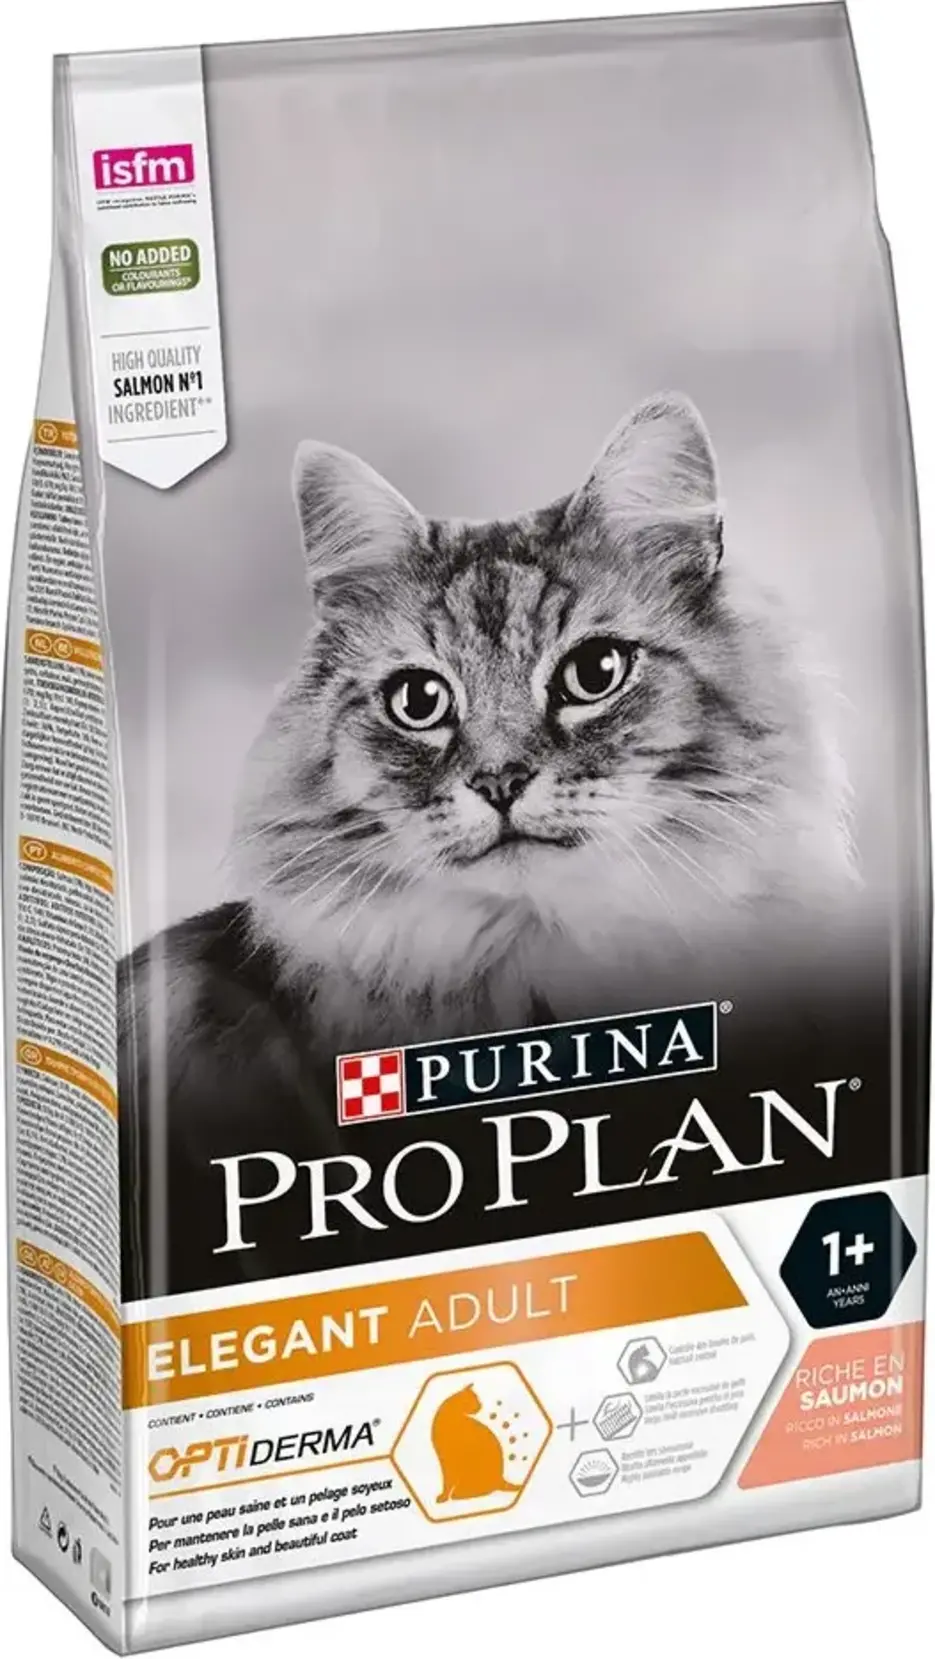 Purina Pro Plan Cat Elegant Adult Optiderma Salmon 3 kg